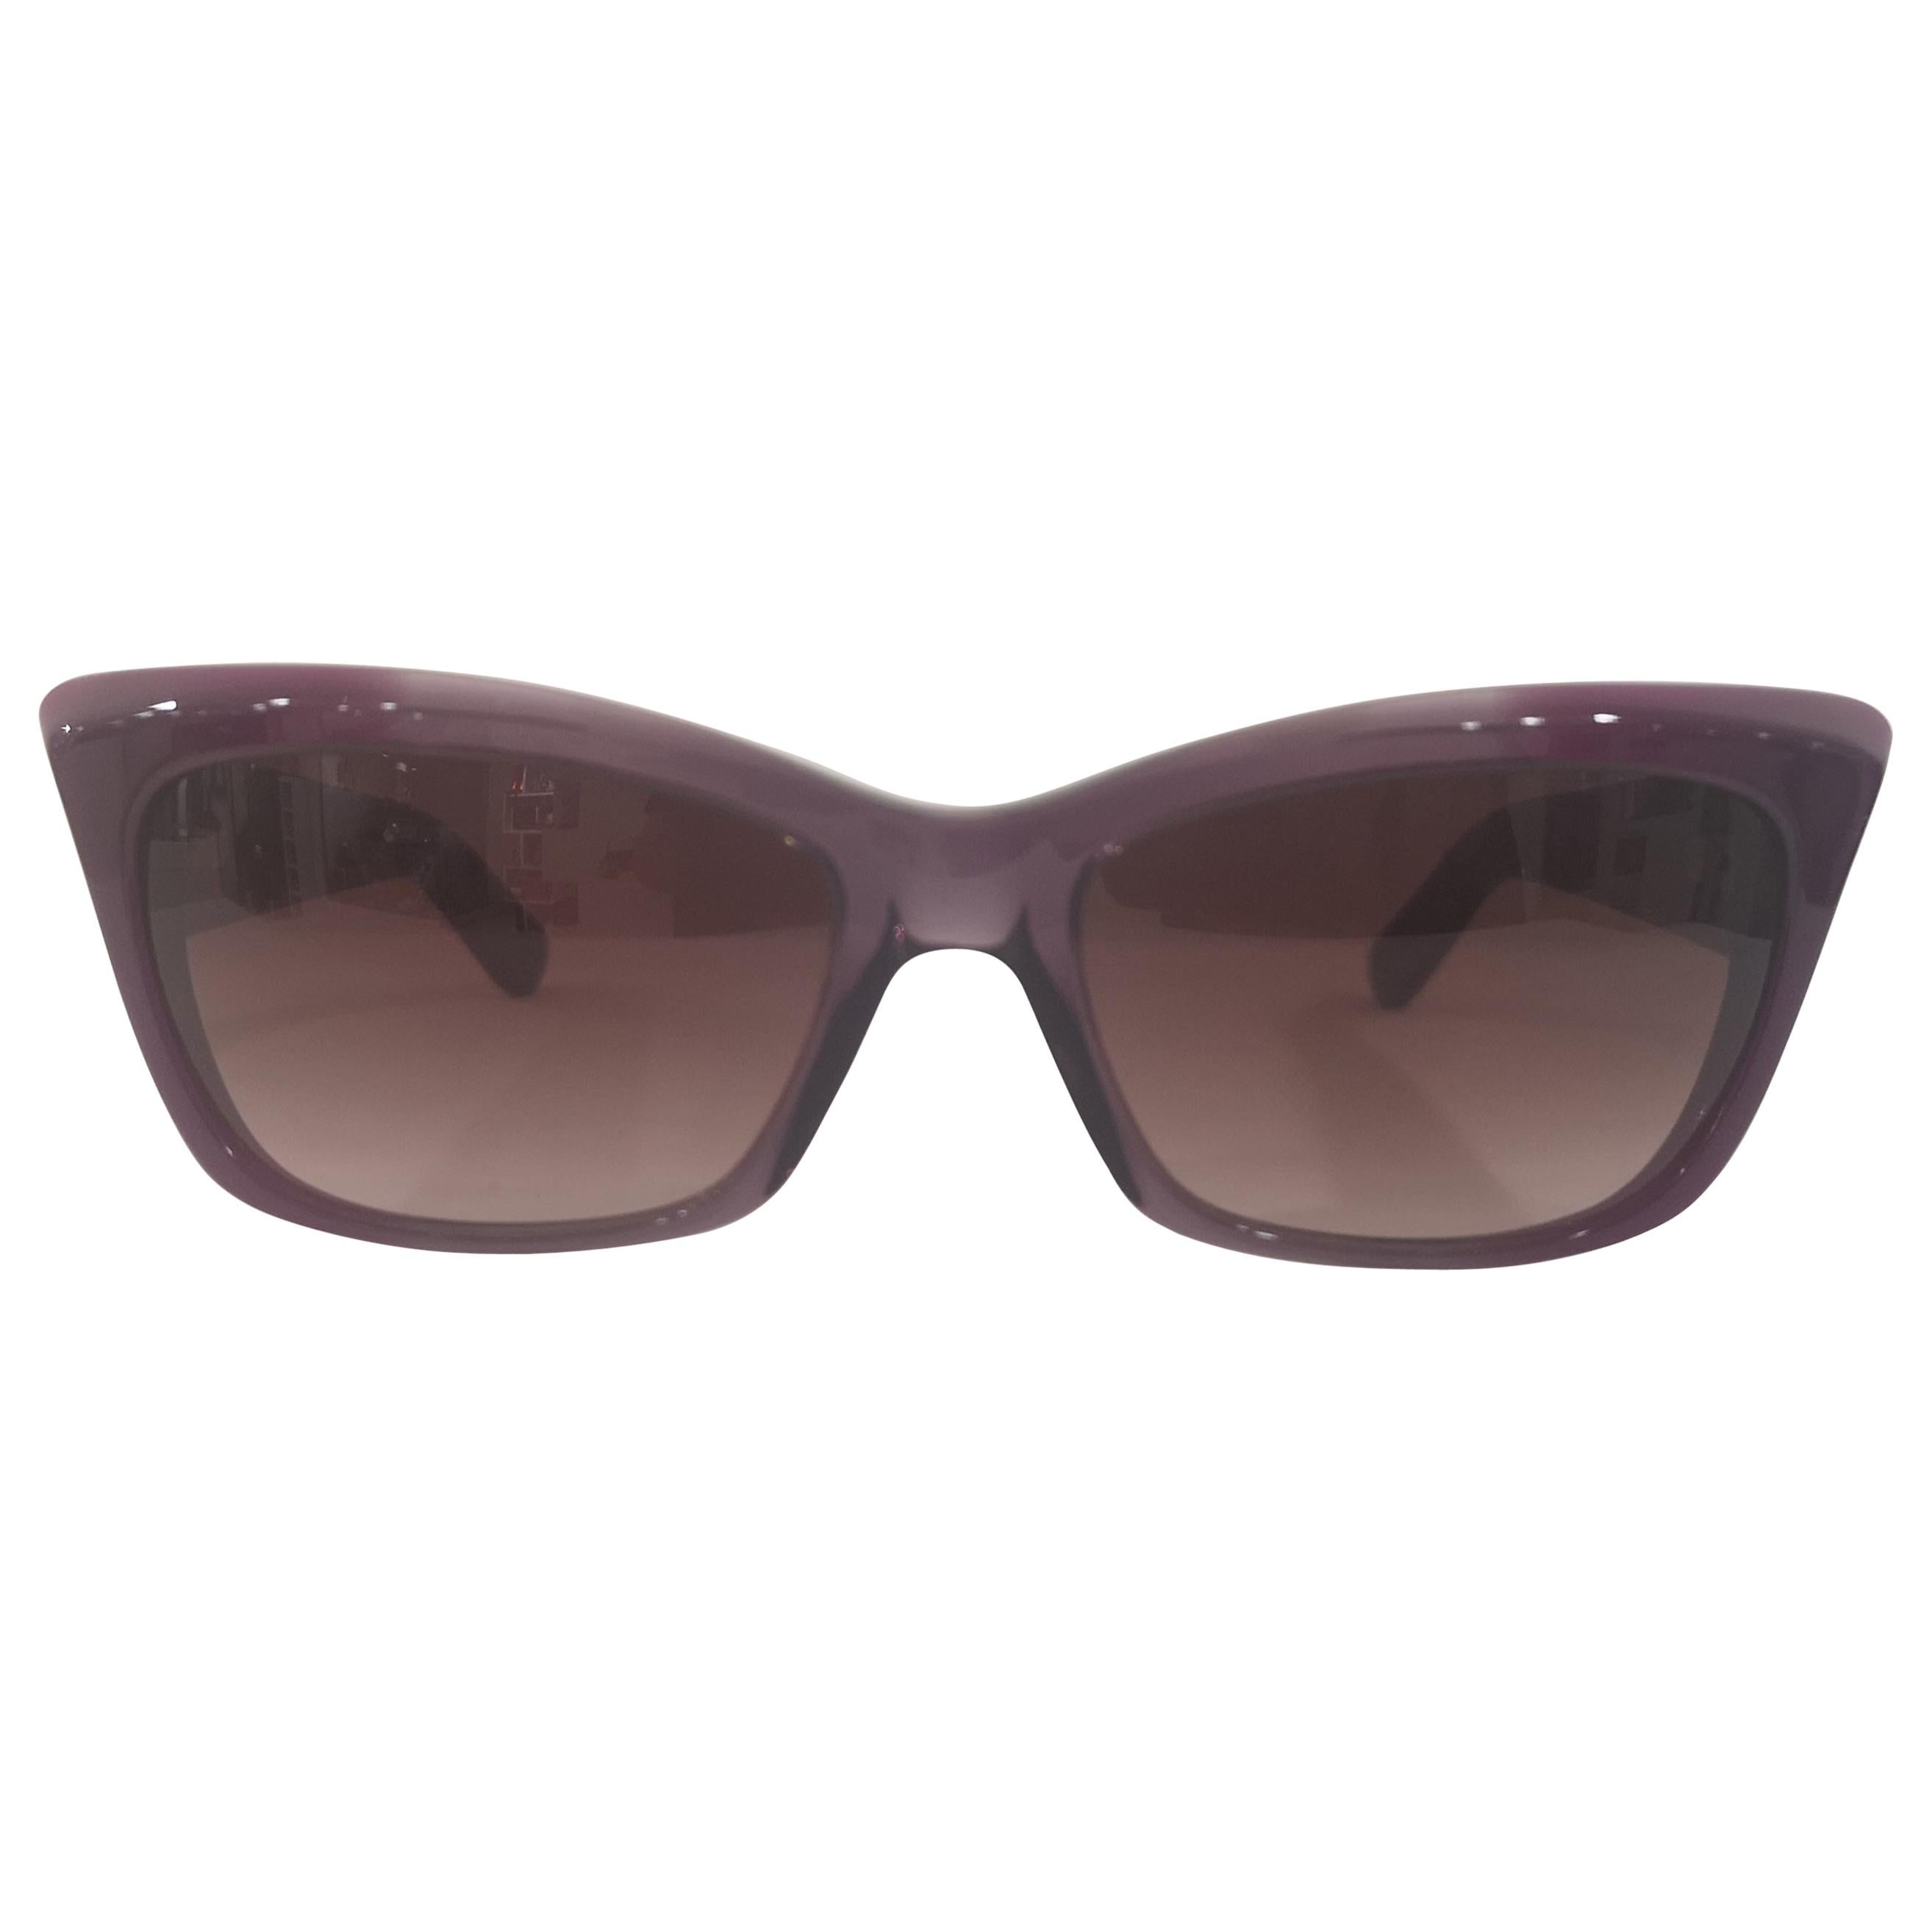 Yves Saint LAurent Purple sunglasses NWOT